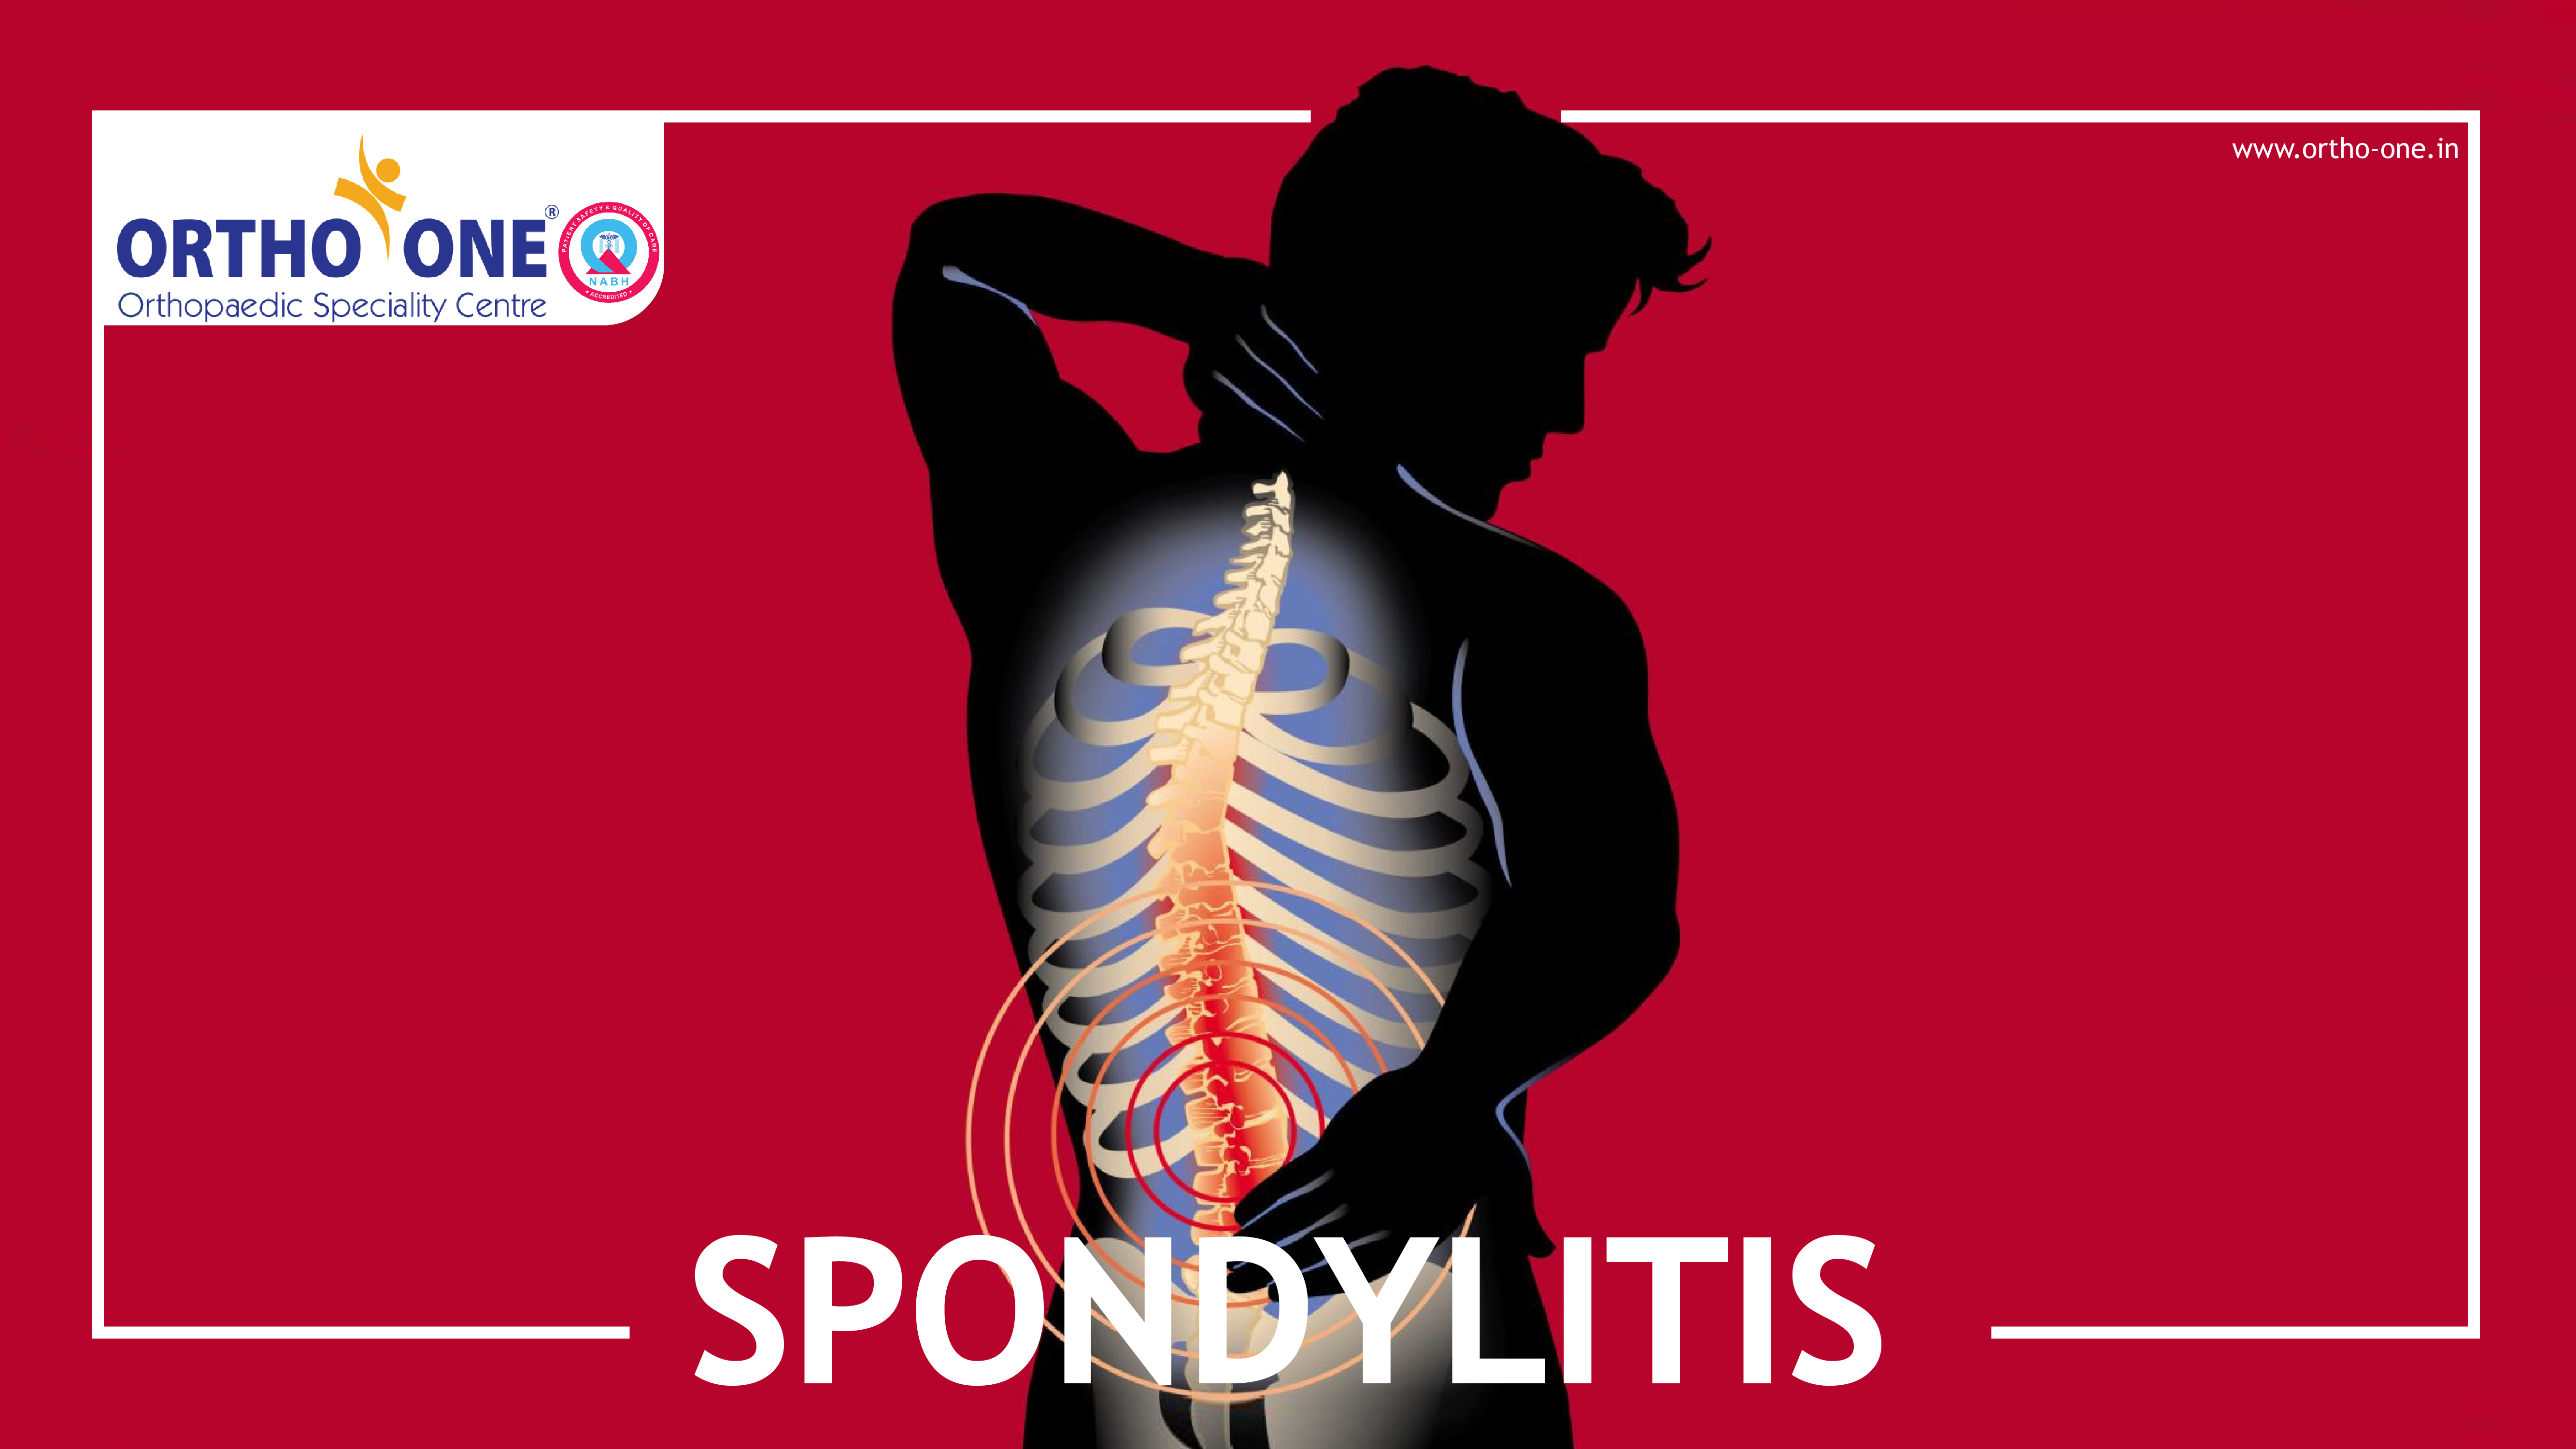 Spondylitis